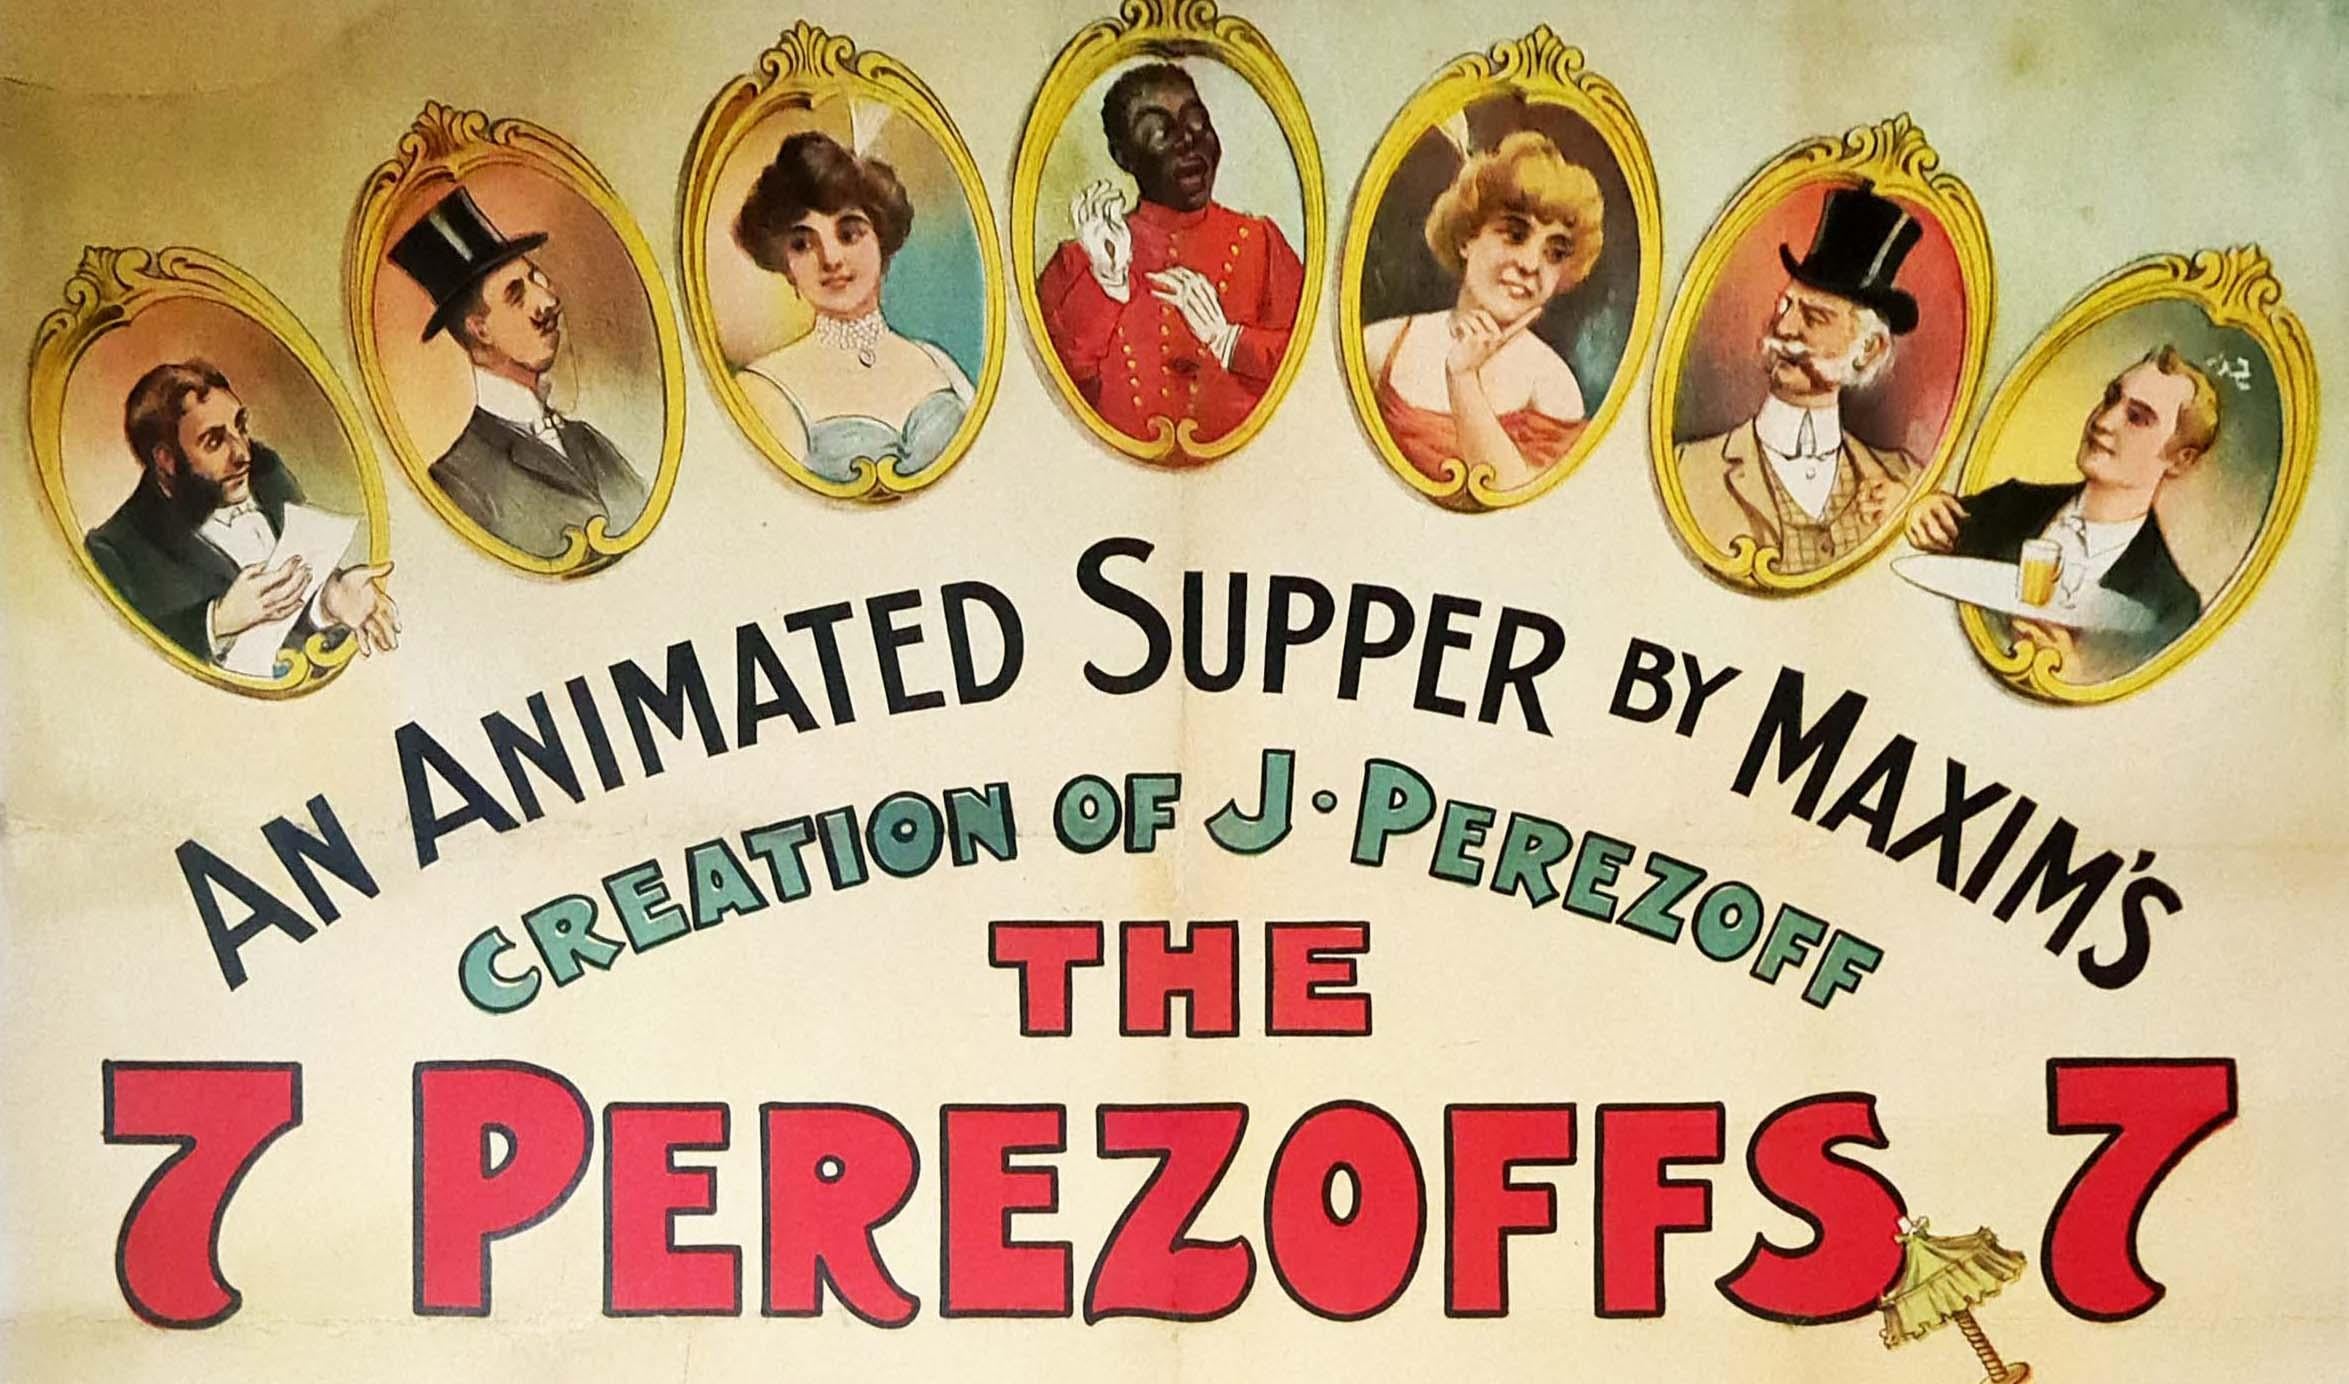 Original circus poster - Un souper animé chez Maxim's by the 7 Perezoffs 1